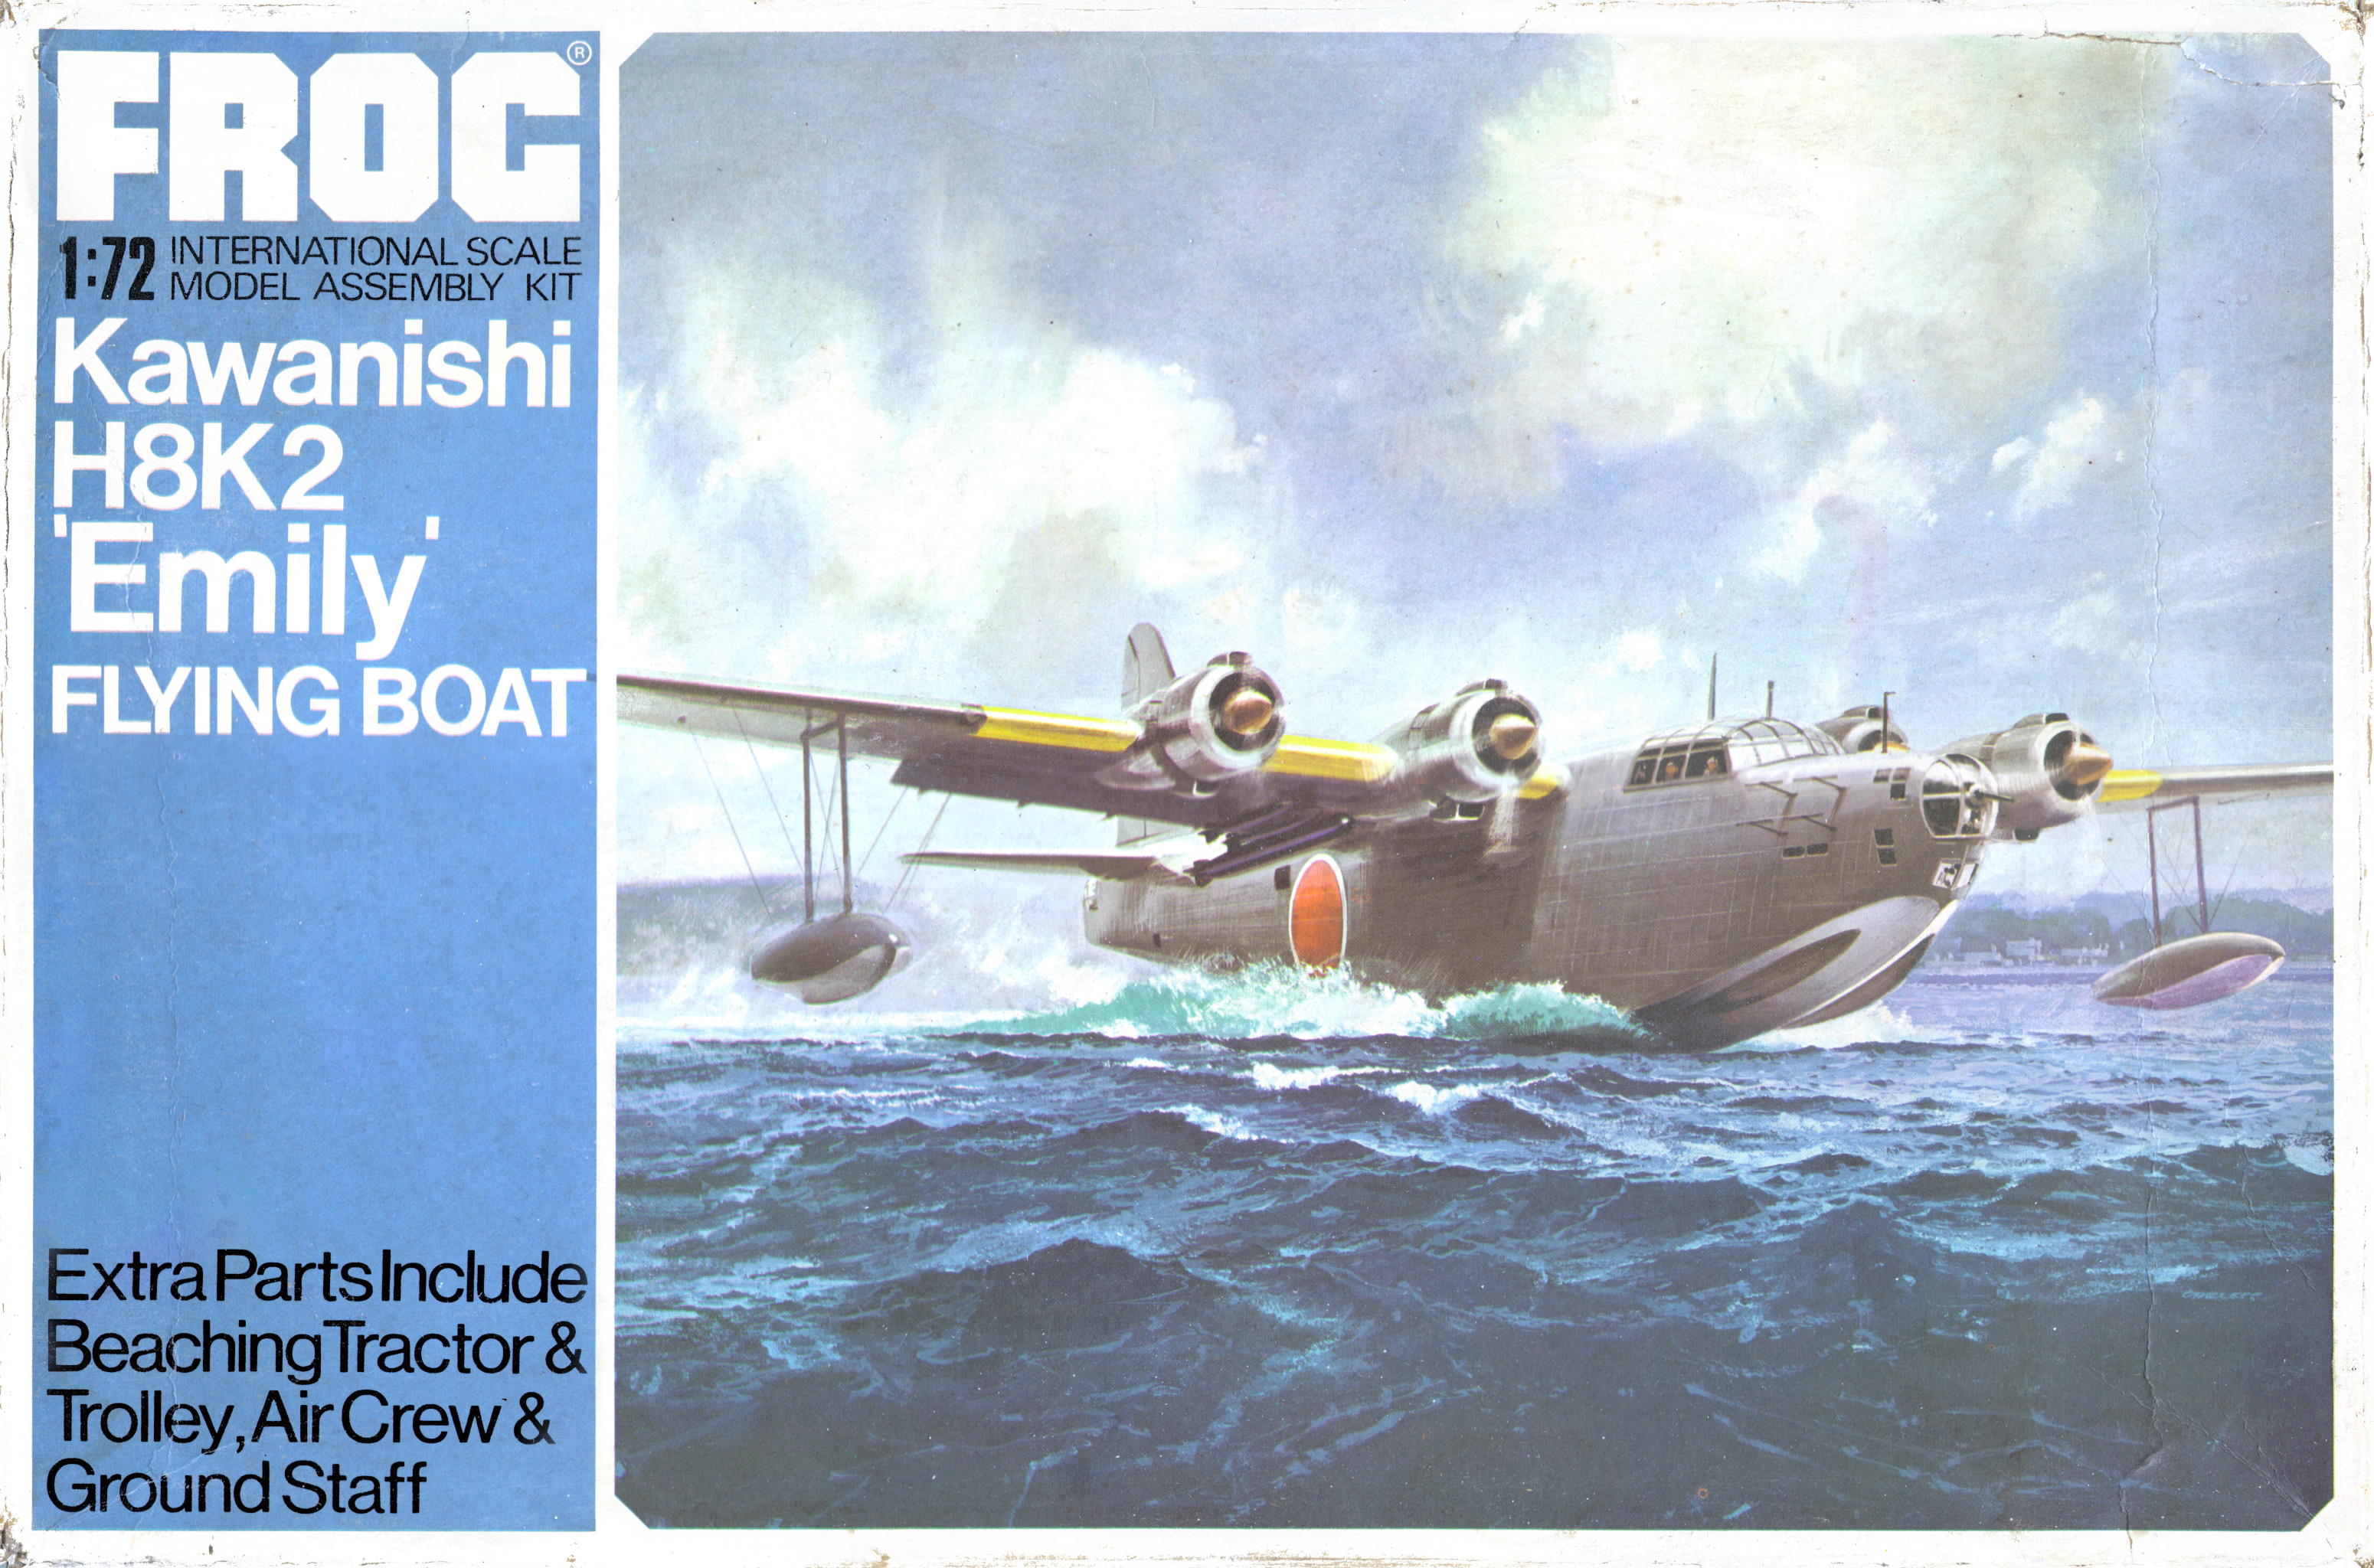 Верх коробки FROG F276, Rovex industries ltd, Kawanishi H8K2 'Emily' flying boat, 1969, иллюстратор Careless